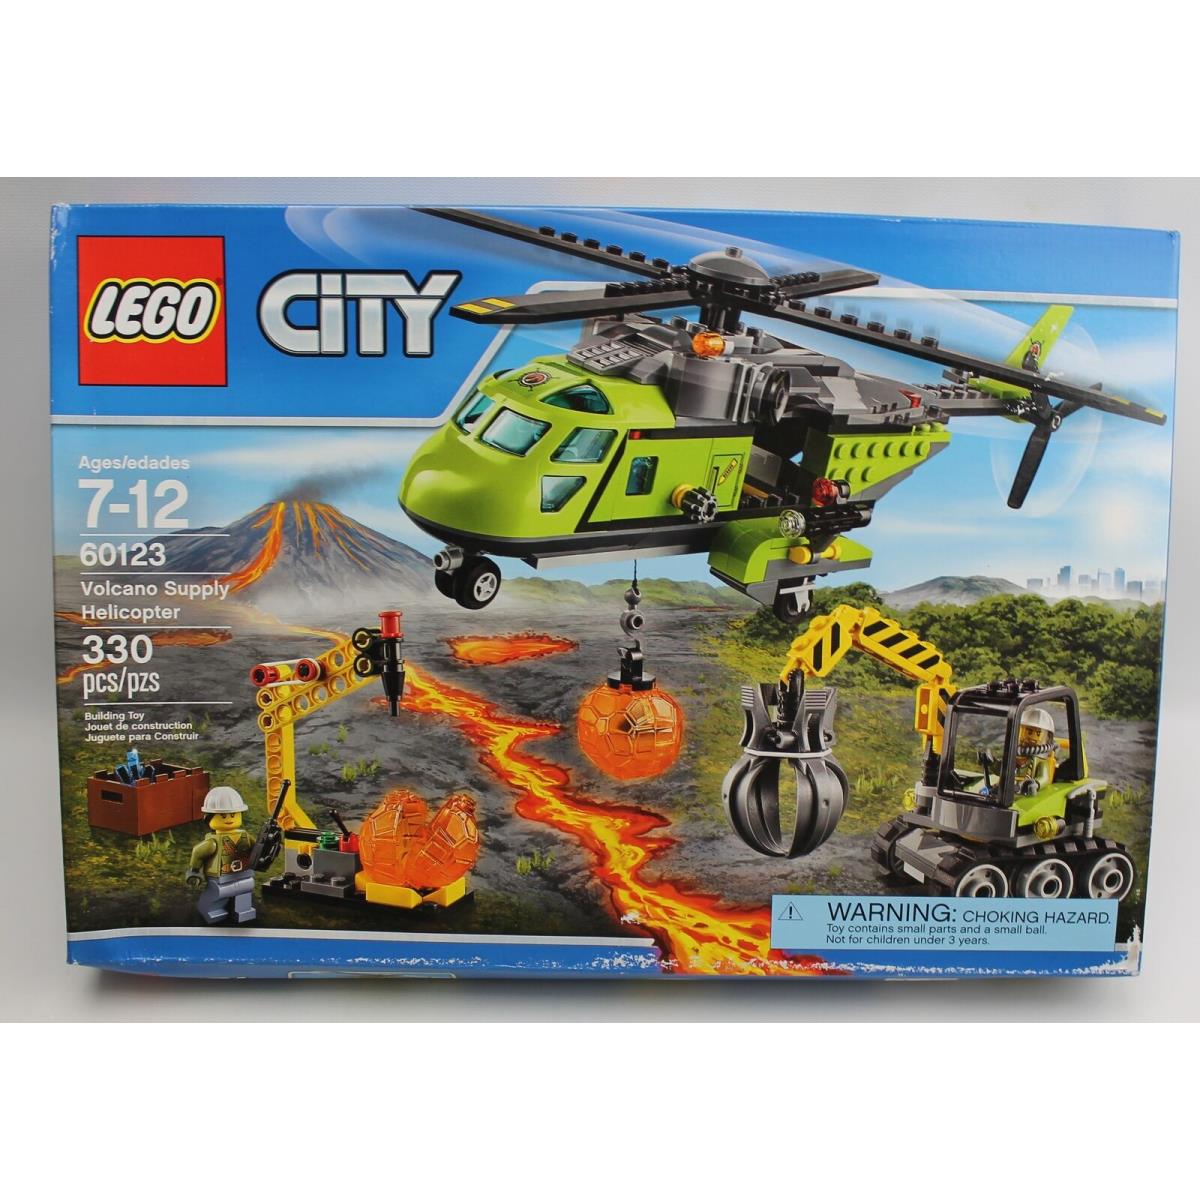 Lego City Volcano Supply Helicopter Set 60123